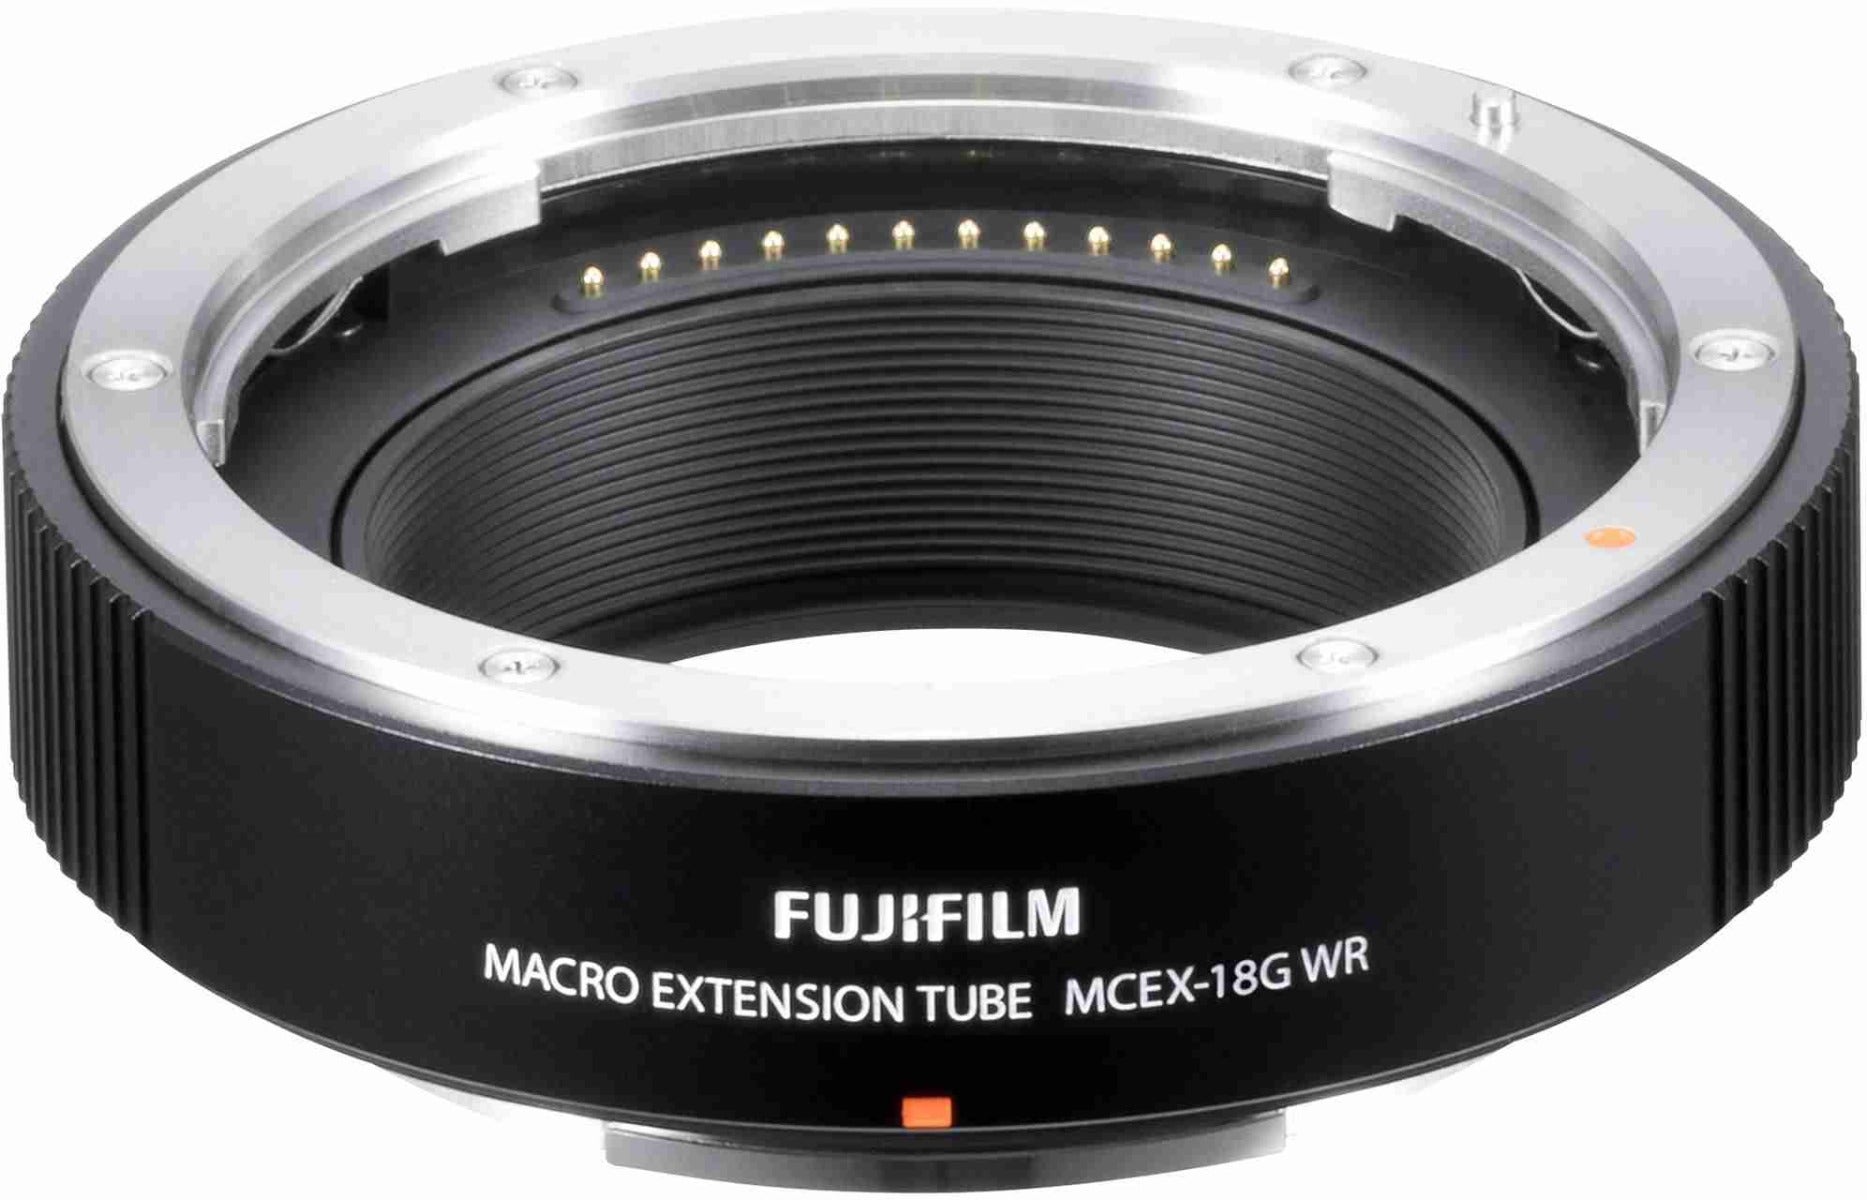 Image of FujiFilm MCEX-18G WR Macro Extension Tube (18mm) - GFX series